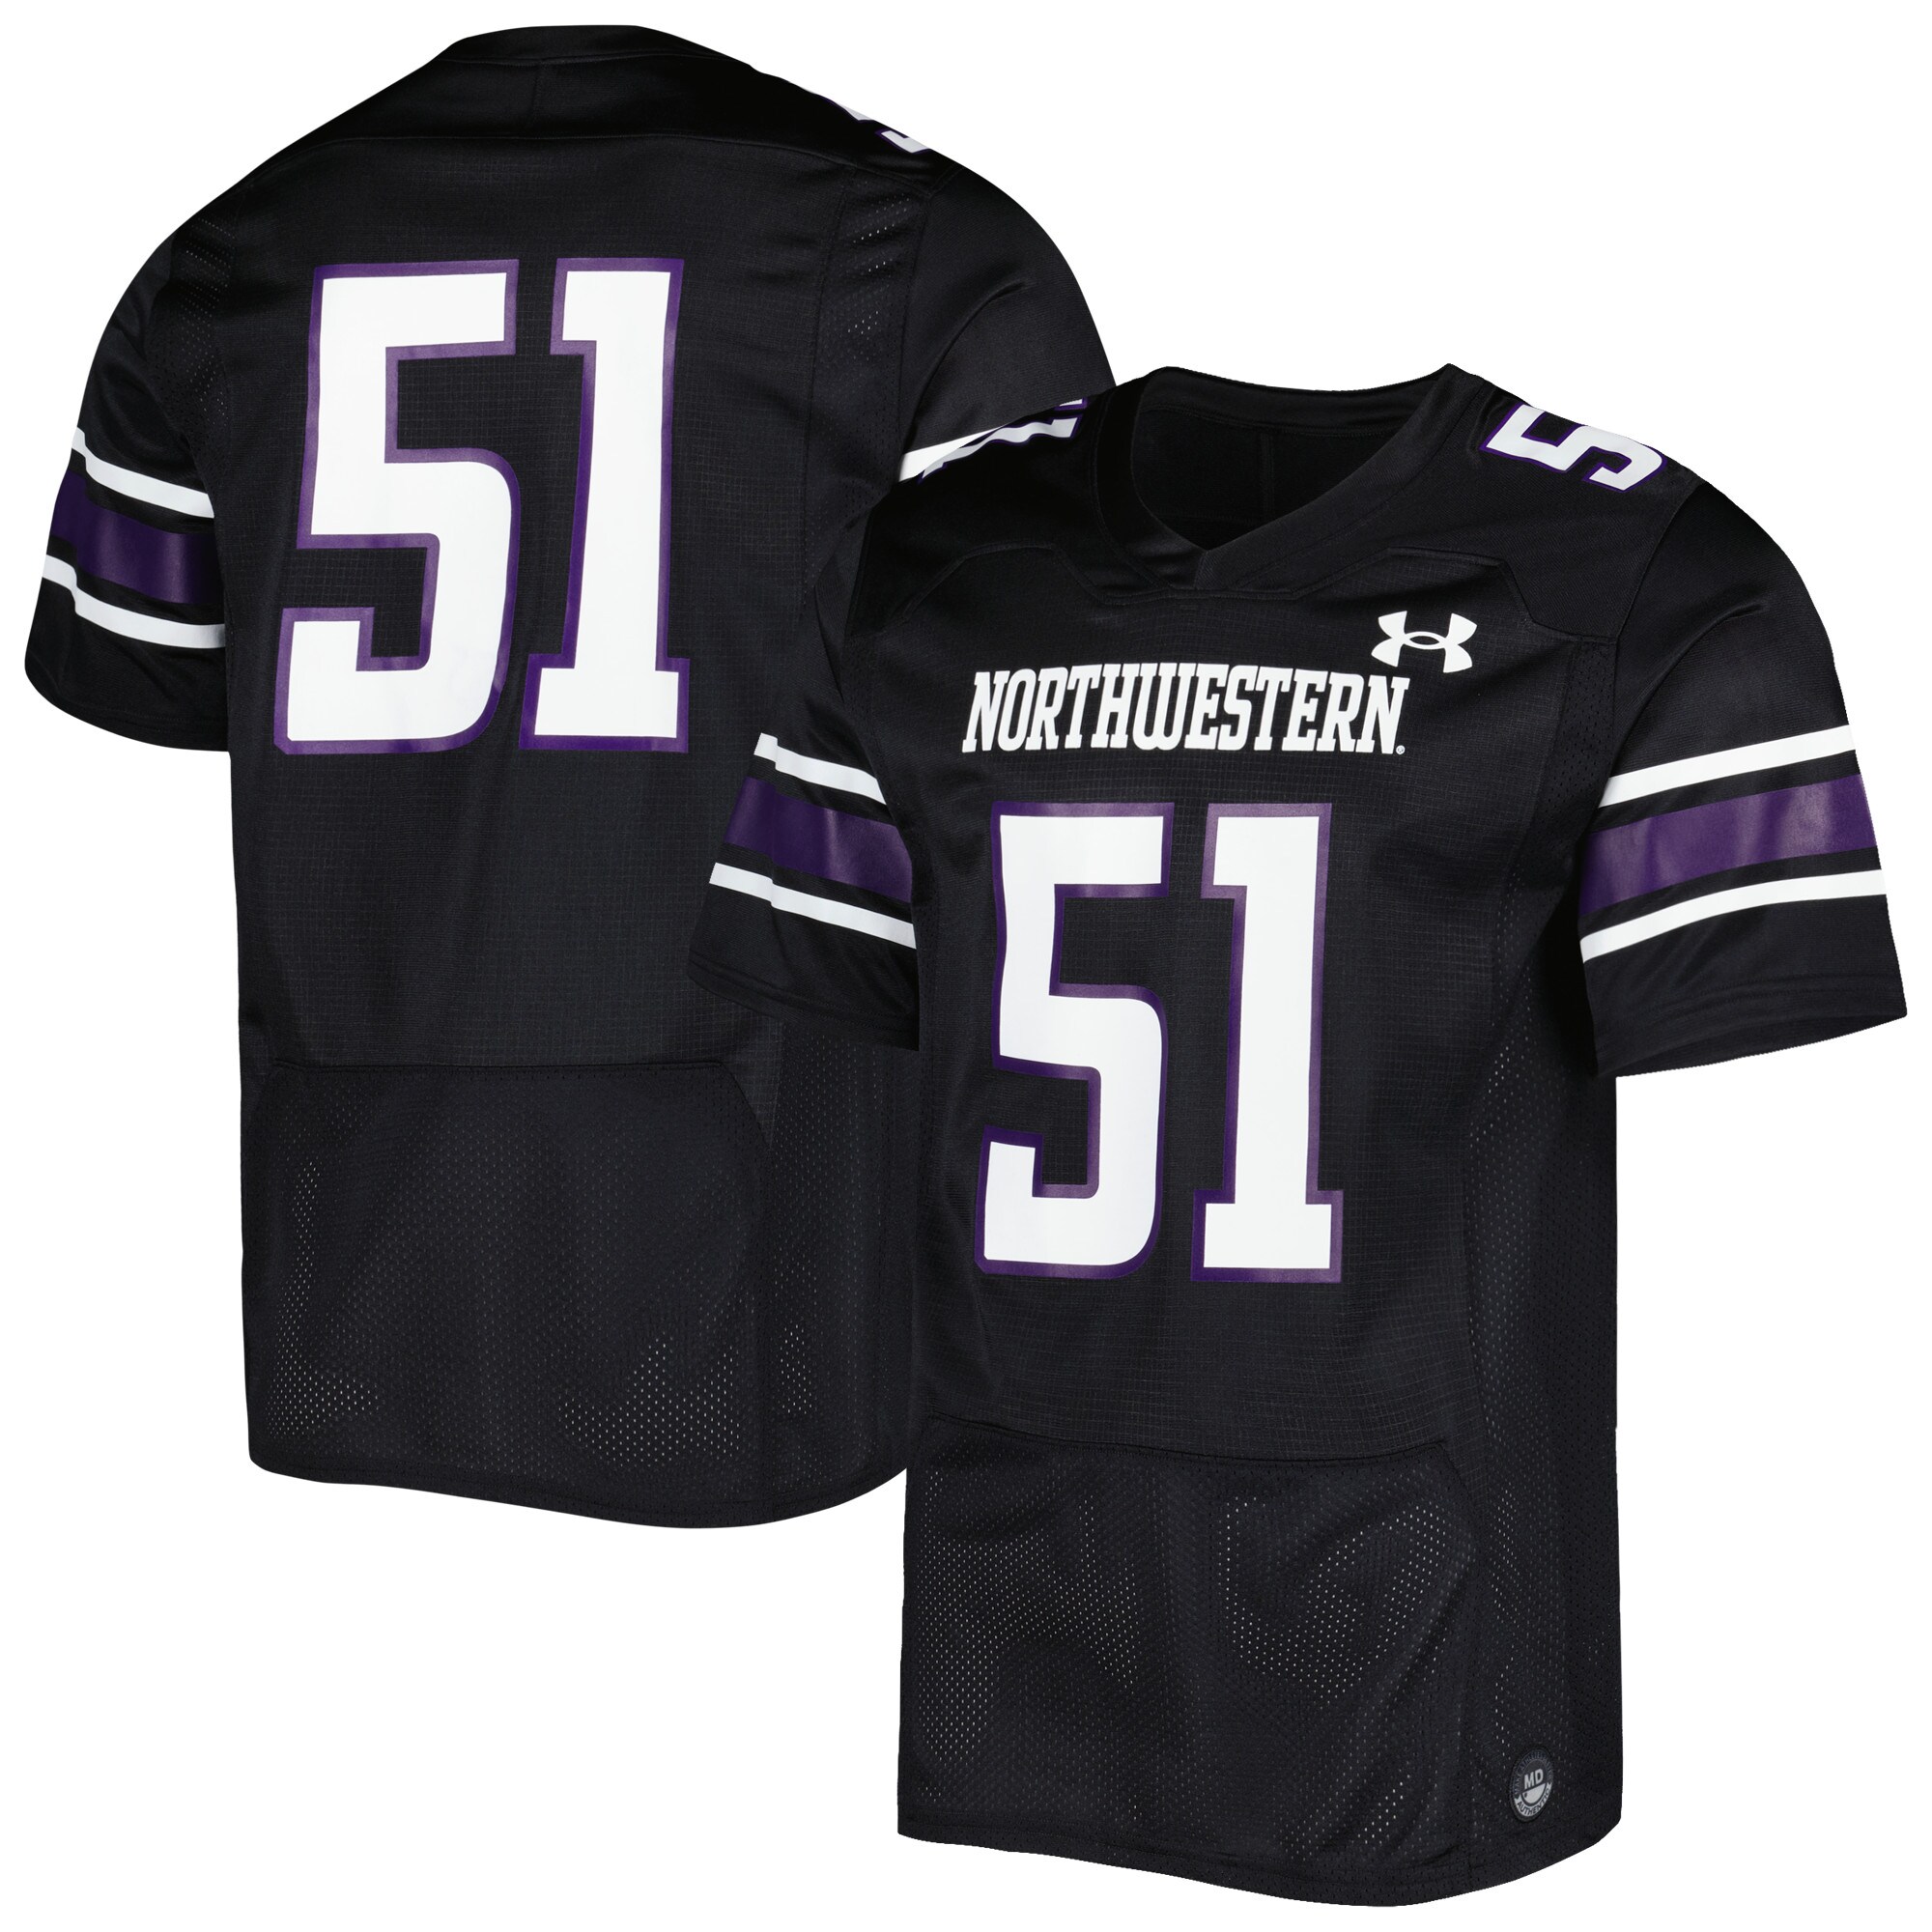 #51 Northwestern Wildcats Under Armour Team Wordmark Replica  Football Shirts Jersey - Black For Youth Women Men